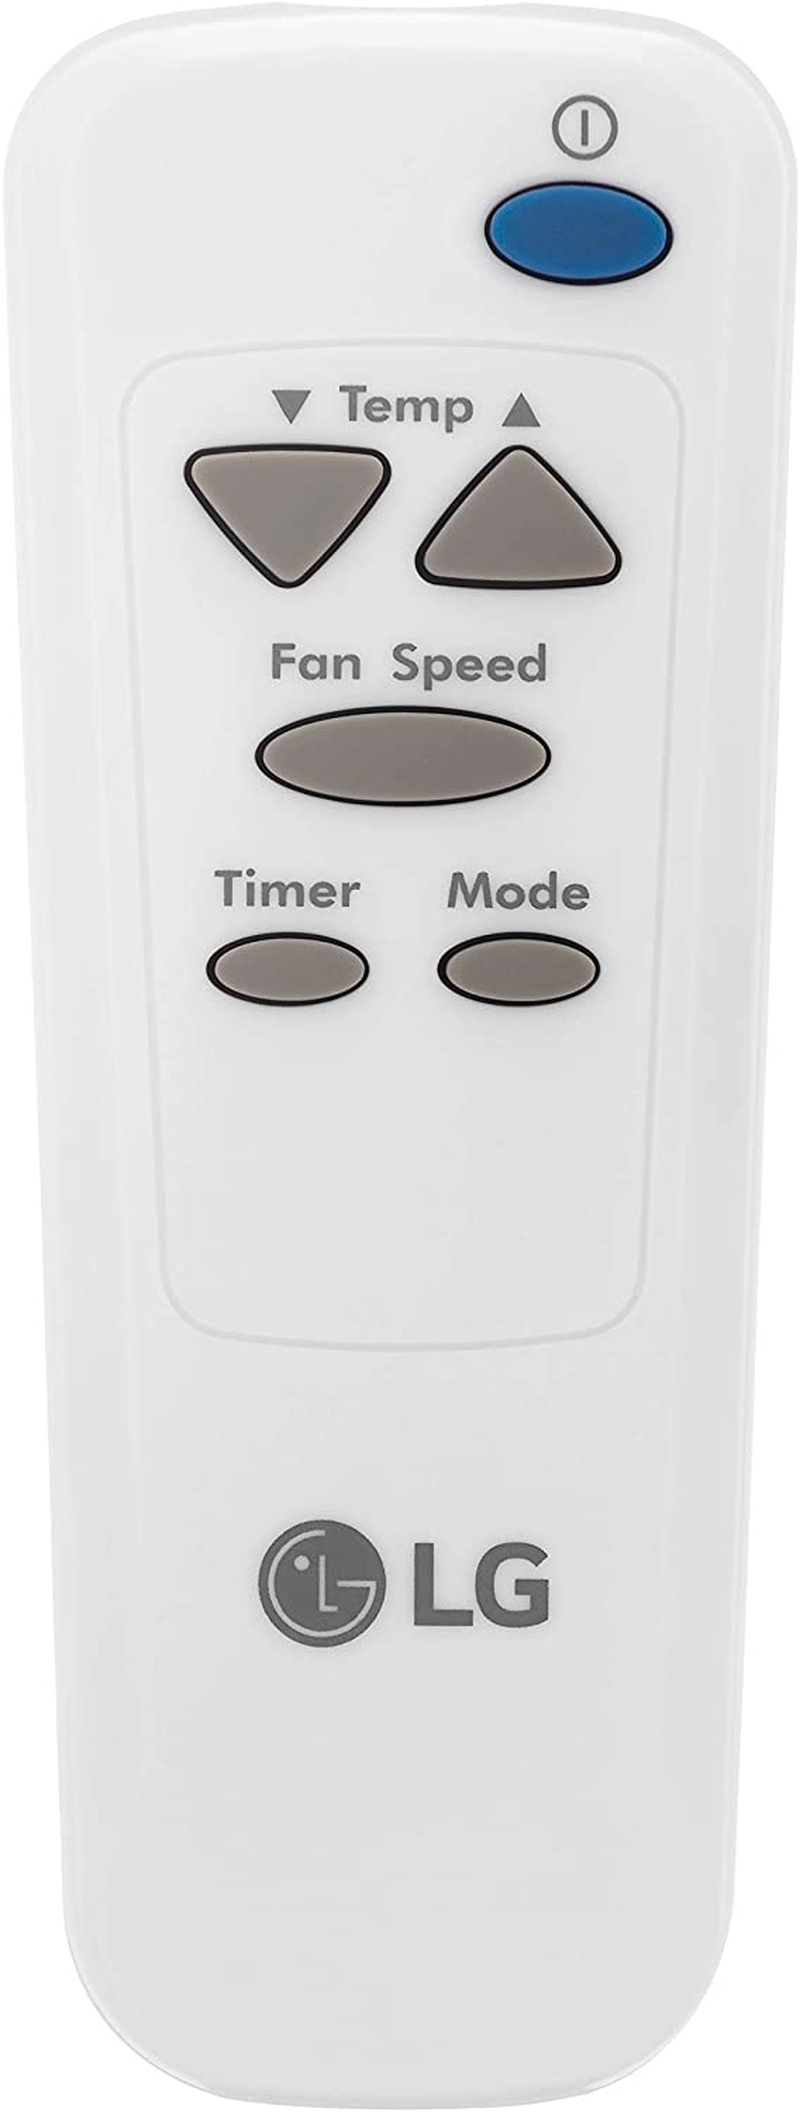 LG 6,000 BTU 115V Window Air Conditioner with Remote Control, White